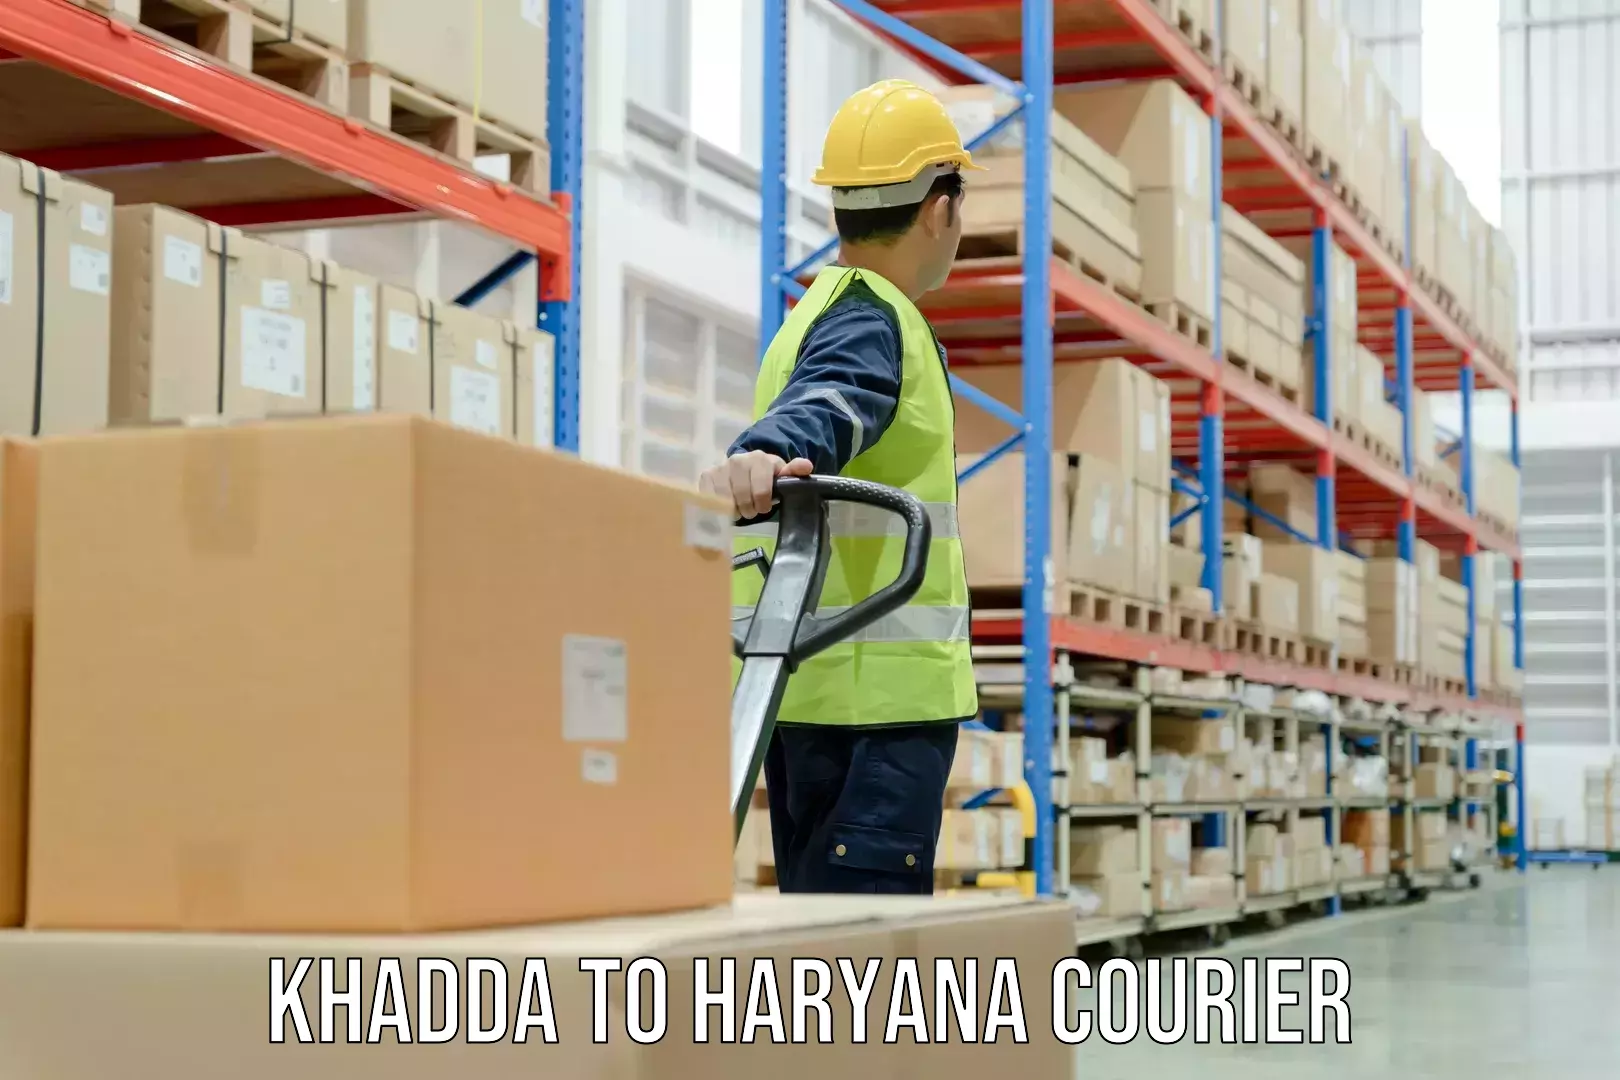 Courier service innovation Khadda to Ellenabad